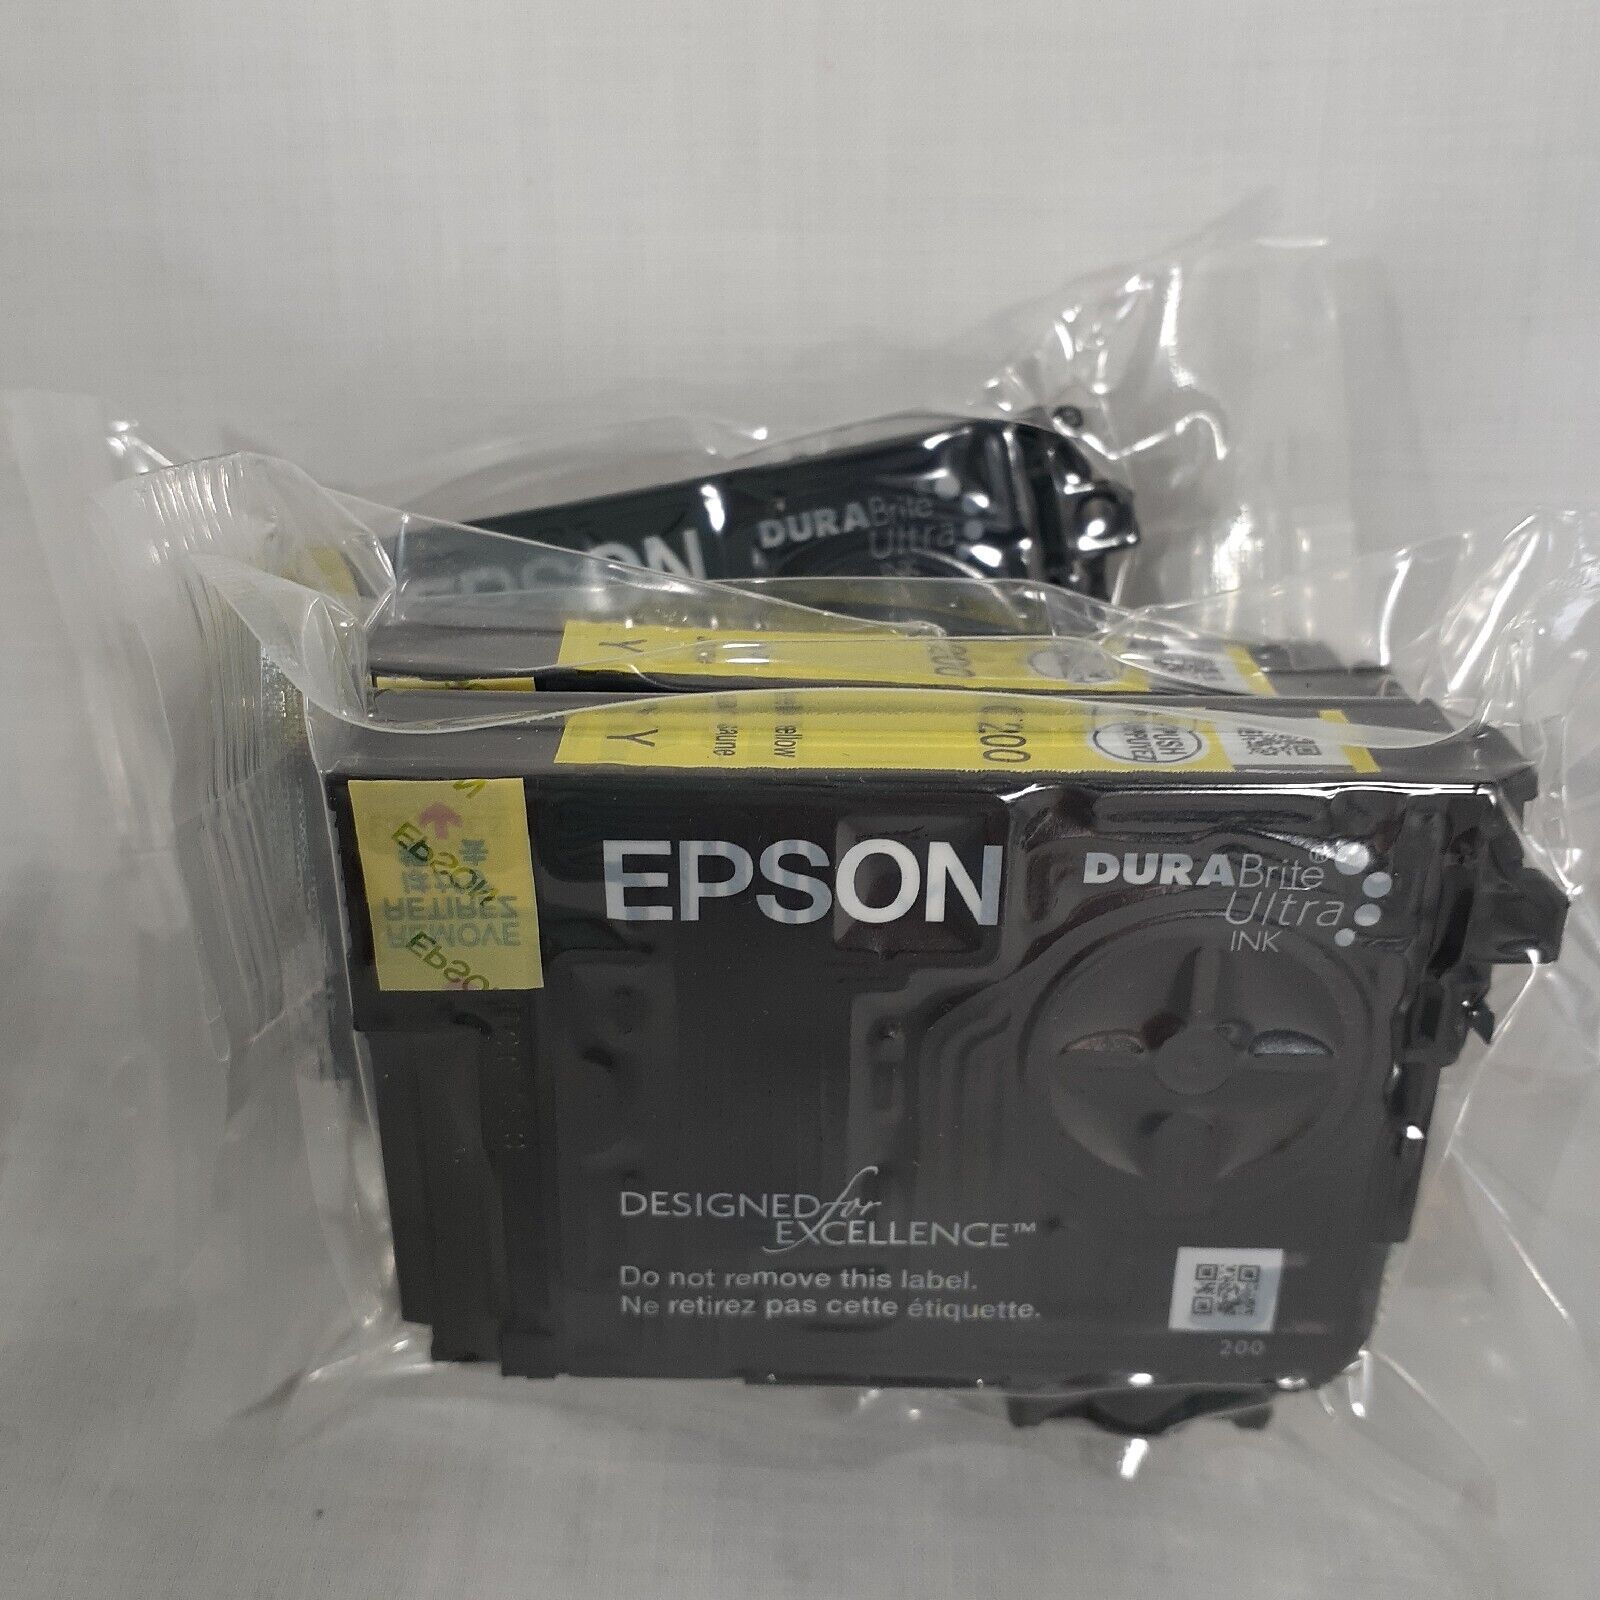 Lot of Three Epson 200 Ink Cartridges 1 Black 2 Yellow Open Box New Sealed